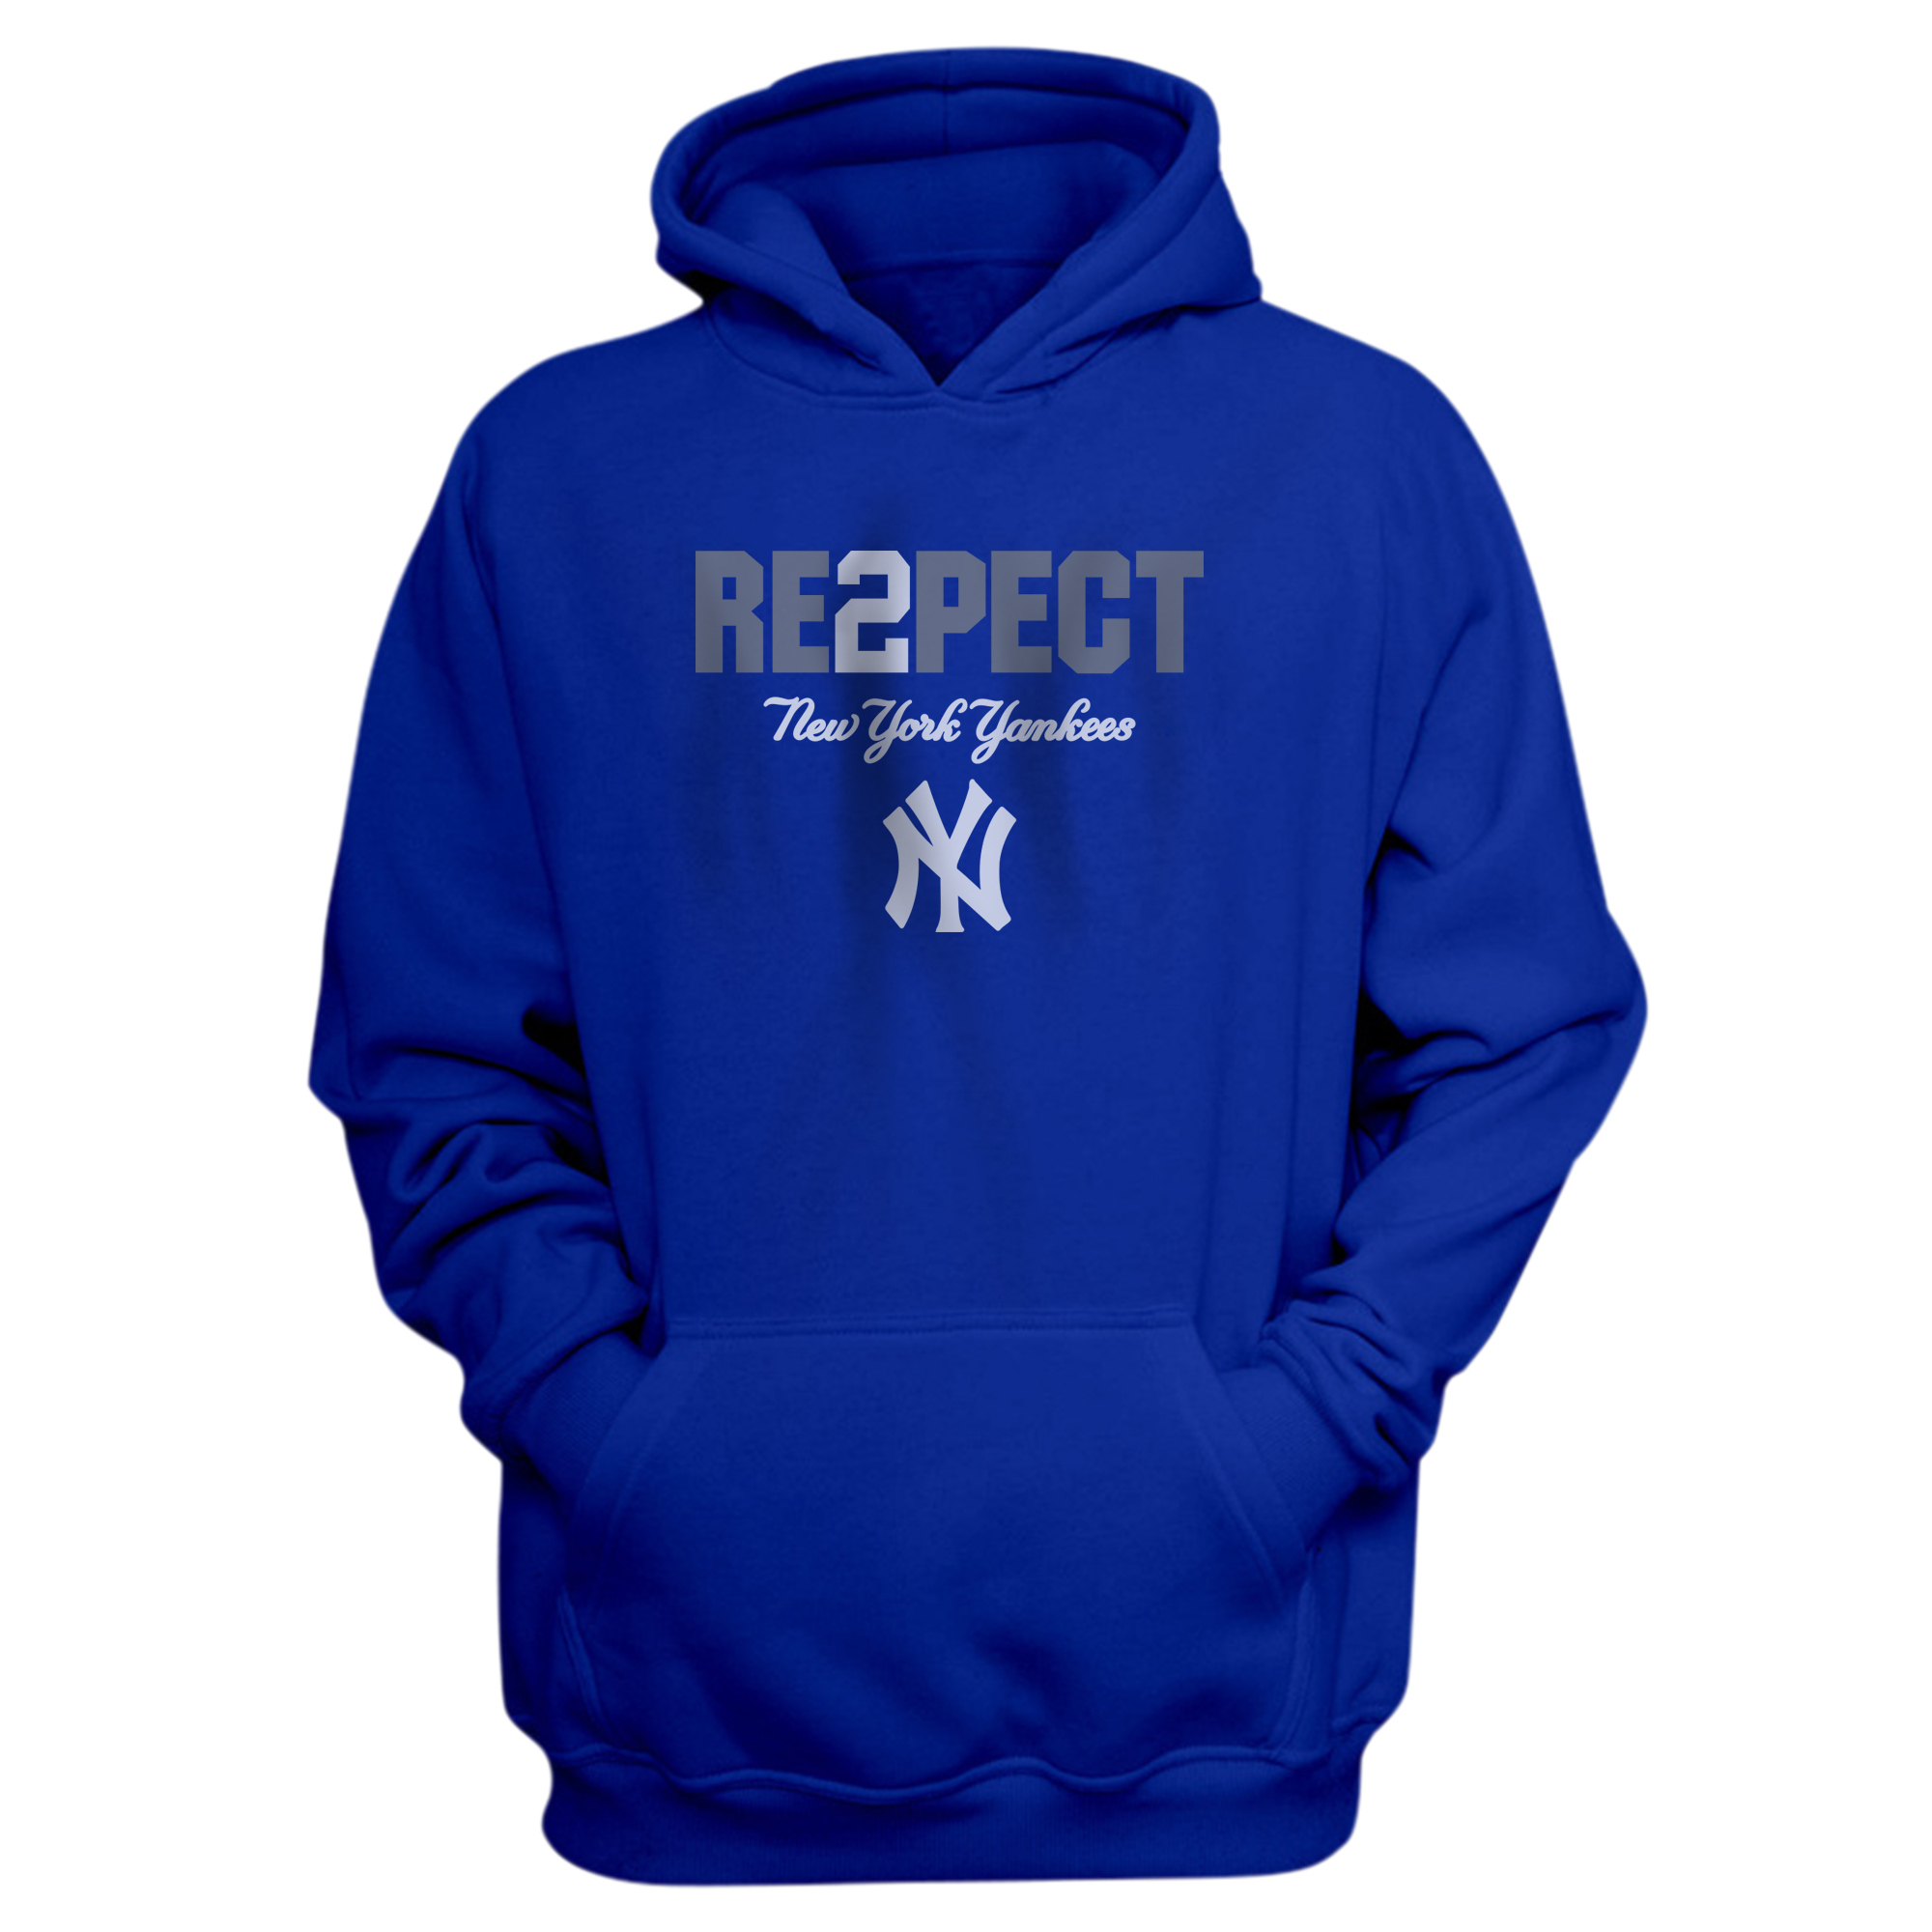 New York Yankees Re2pect Hoodie (HD-BLU-817-Re2pect)